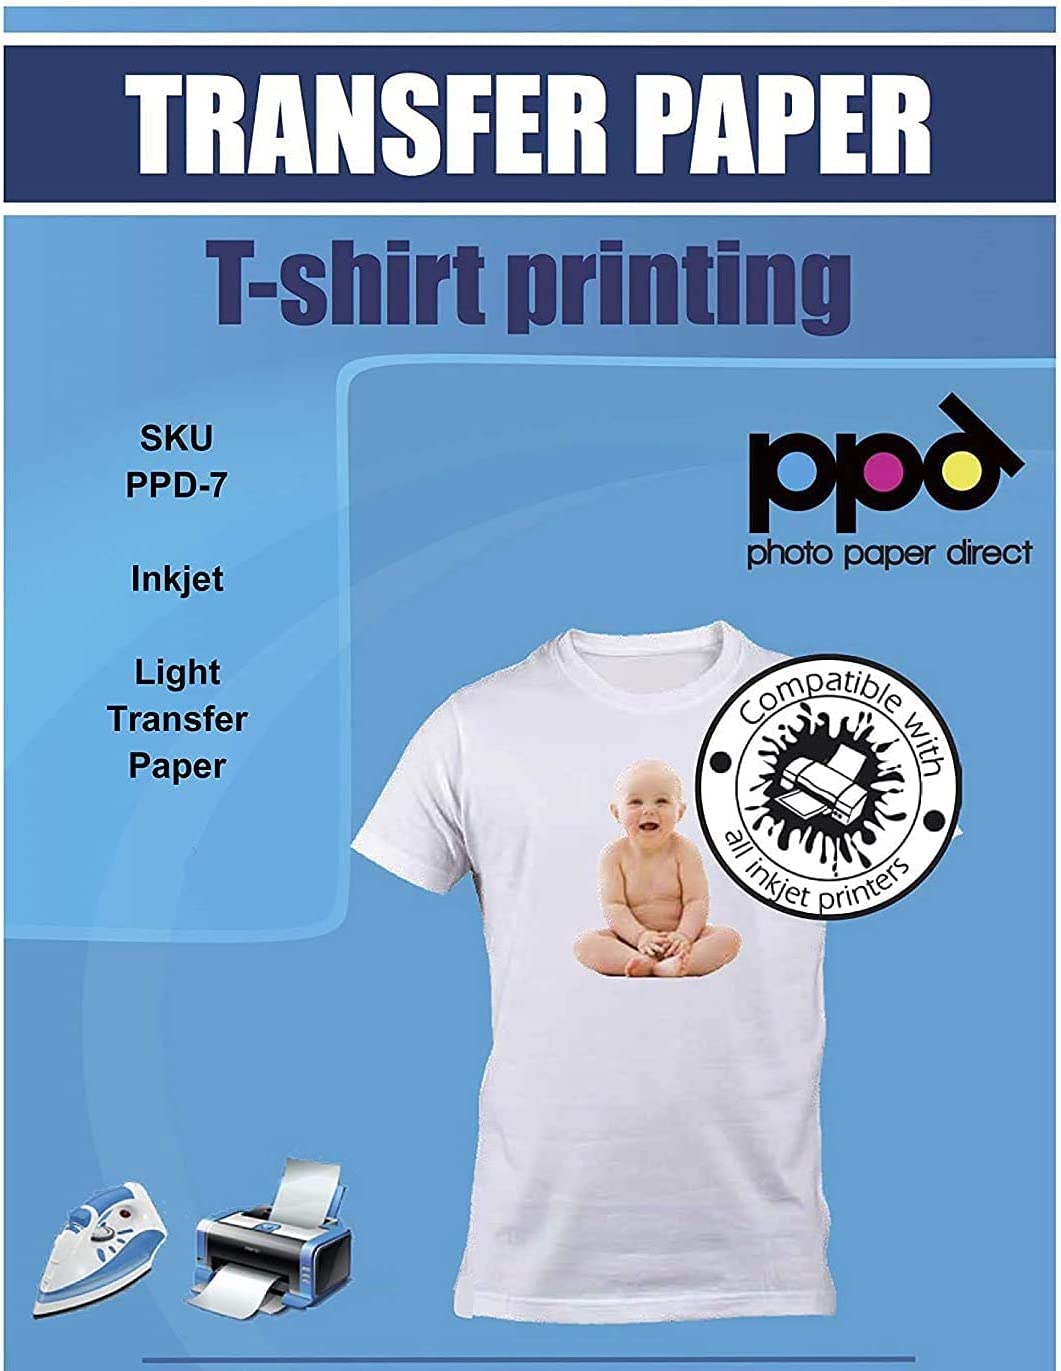 How to print HP iron-on transfers for light fabrics, HP inkjet printers